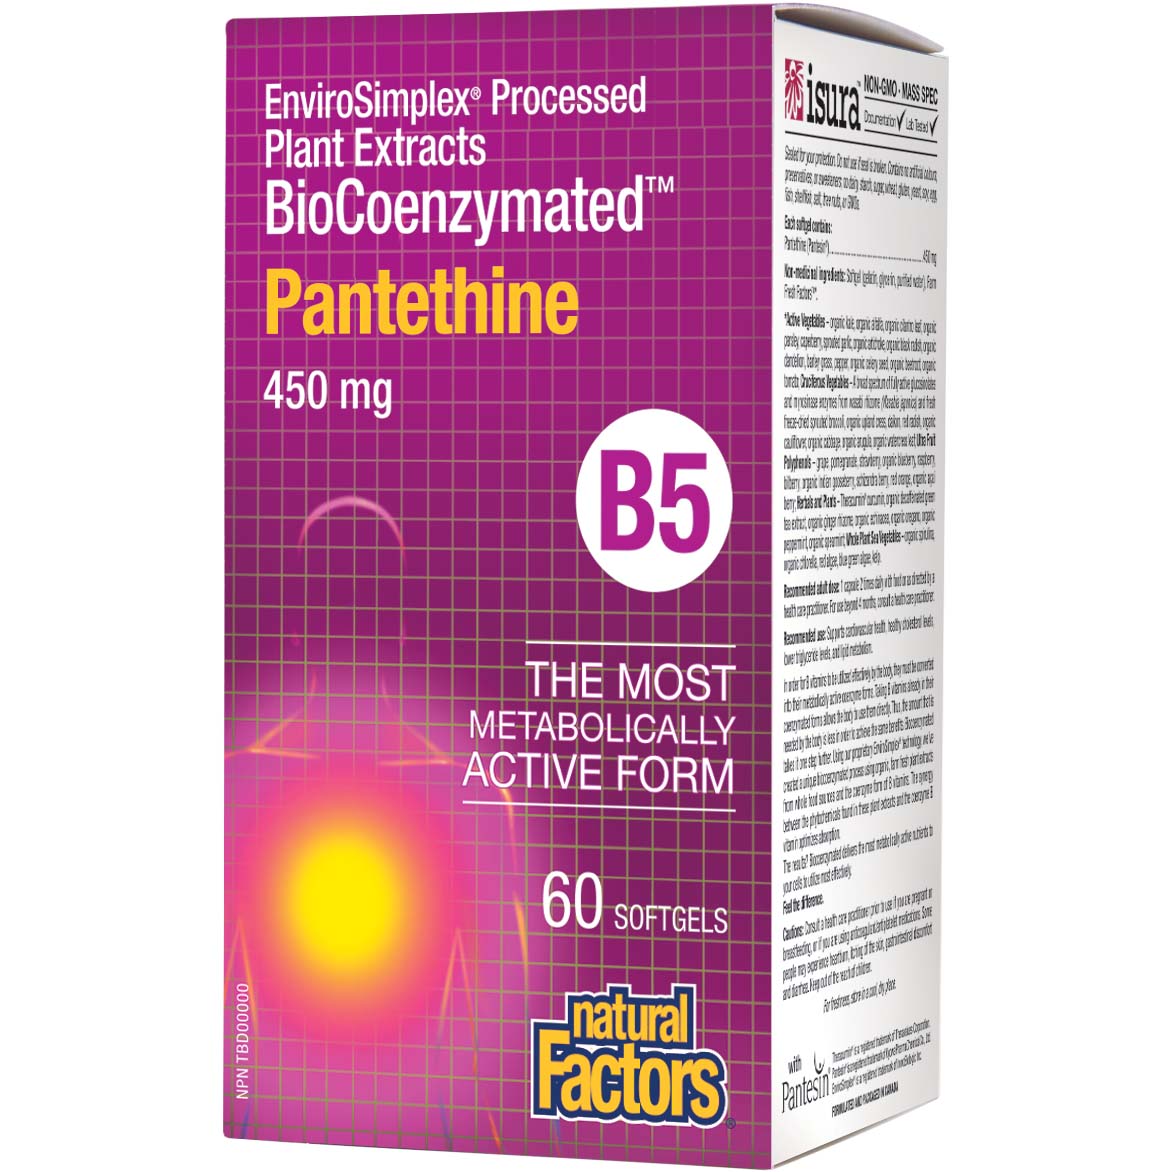 Natural Factors B5 Biocoenzymated Pantethine, 450 mg, 60 Softgels